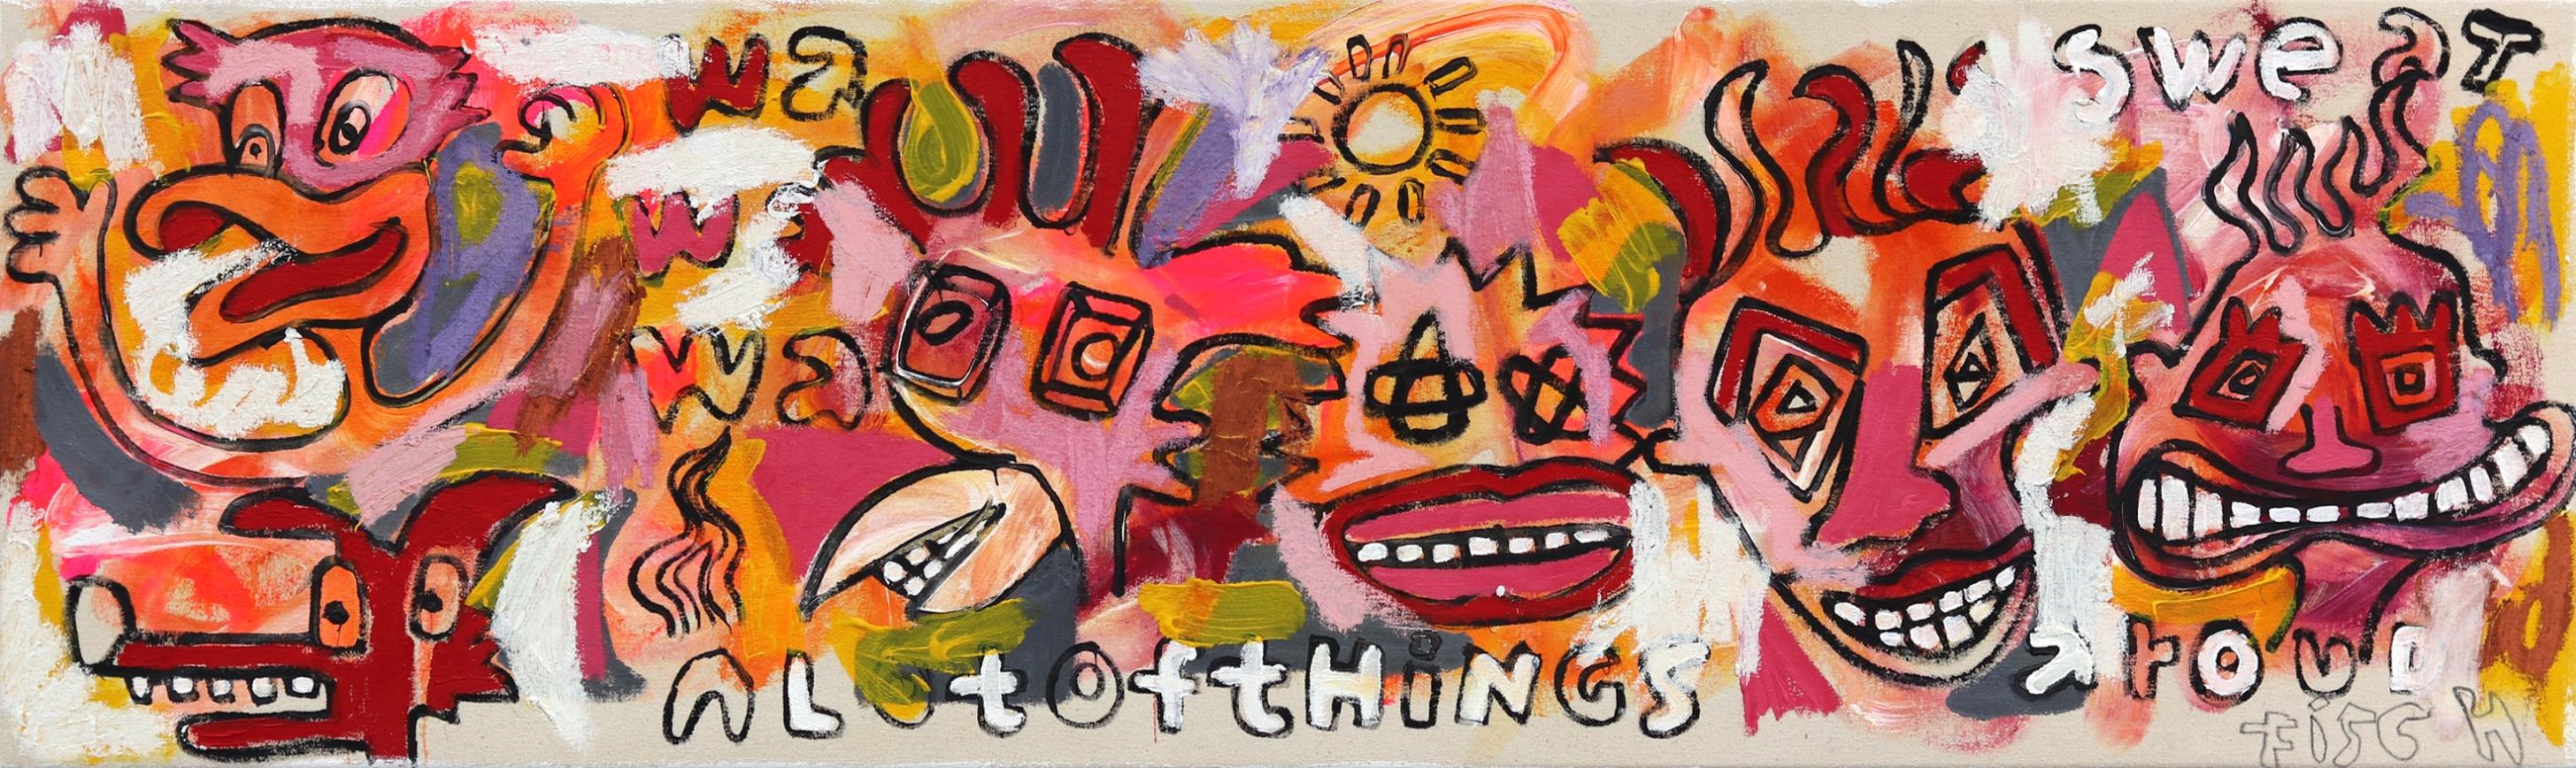 A Lot of Things – Rotes Originalgemälde des abstrakten Expressionismus, Straßenkunst – Mixed Media Art von Jonas Fisch